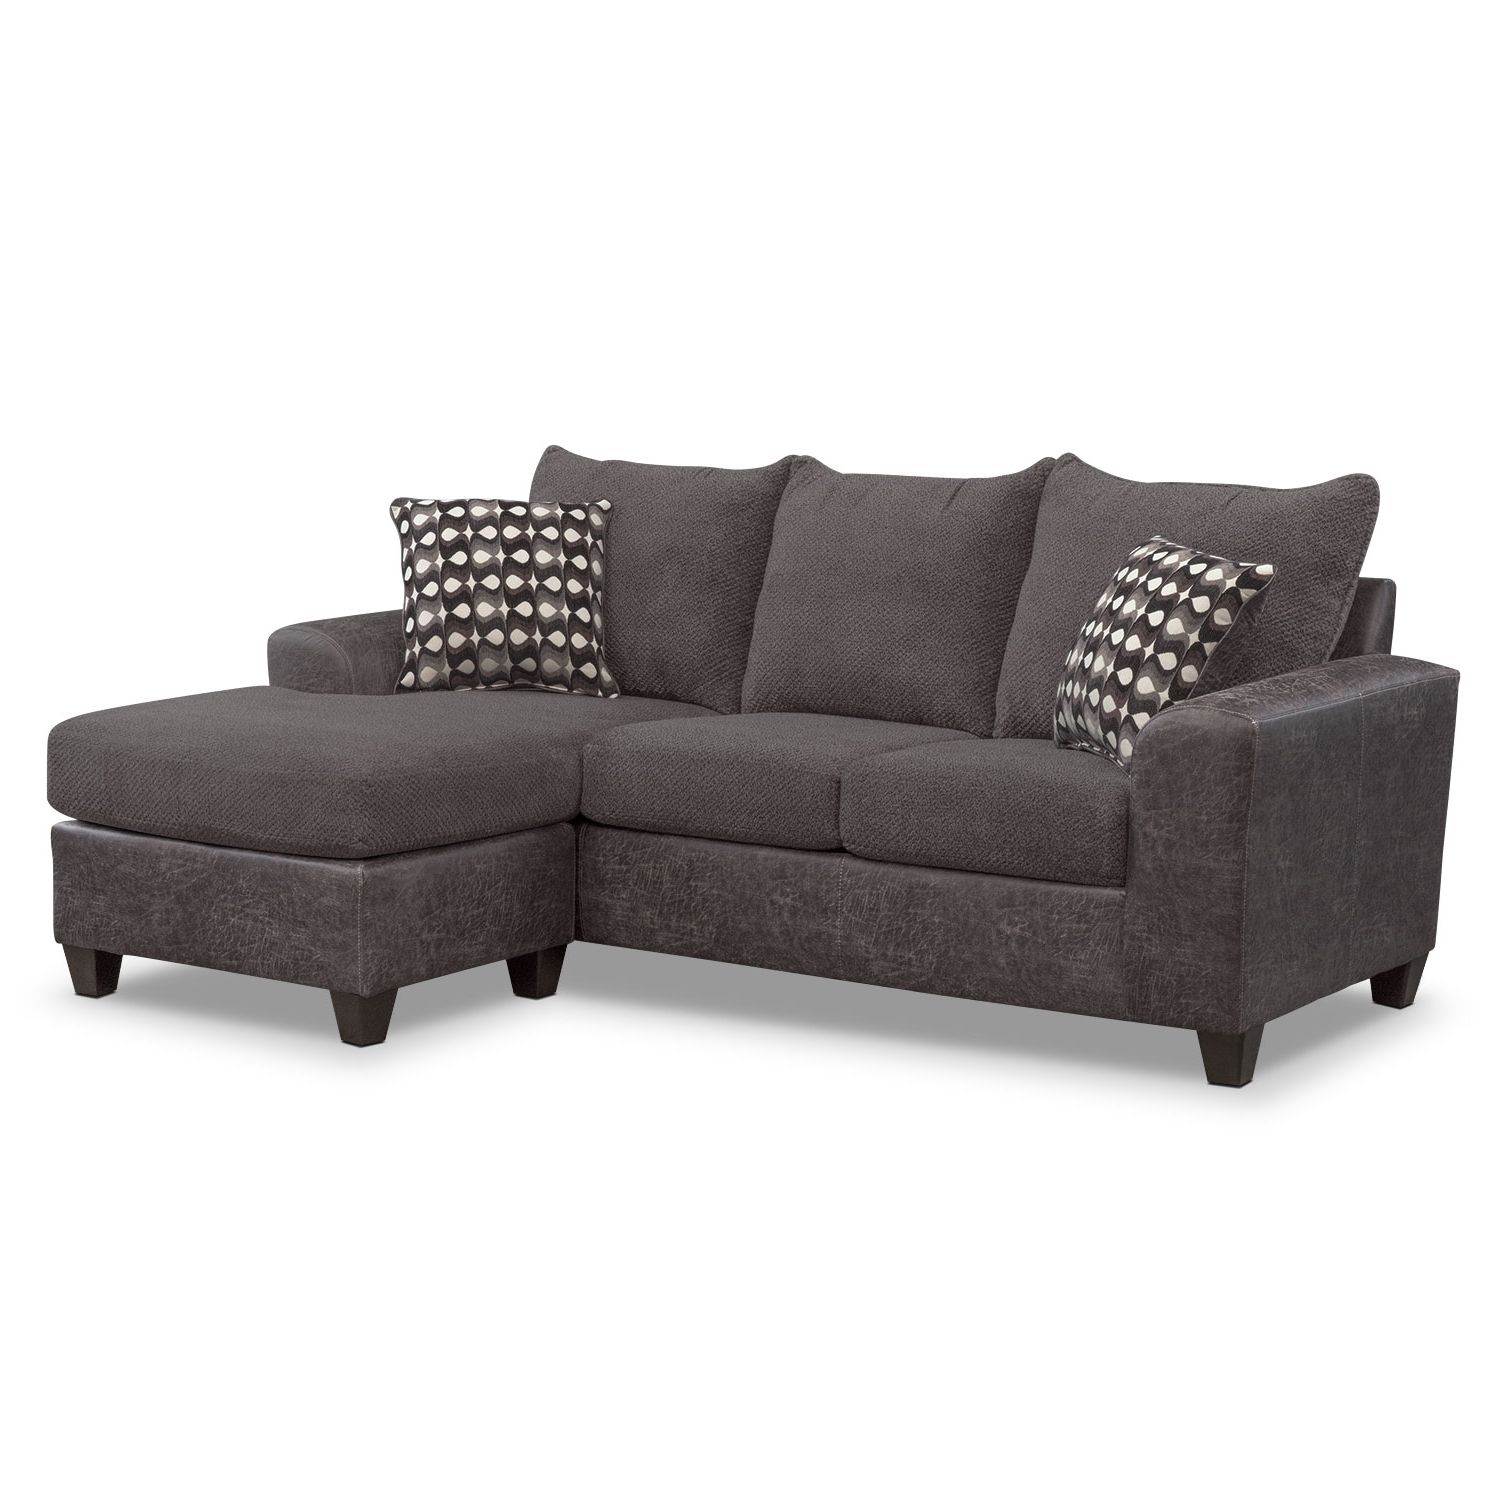 American Signature Furniture Regarding Popular Gray Sofa With Chaise (Photo 1 of 15)